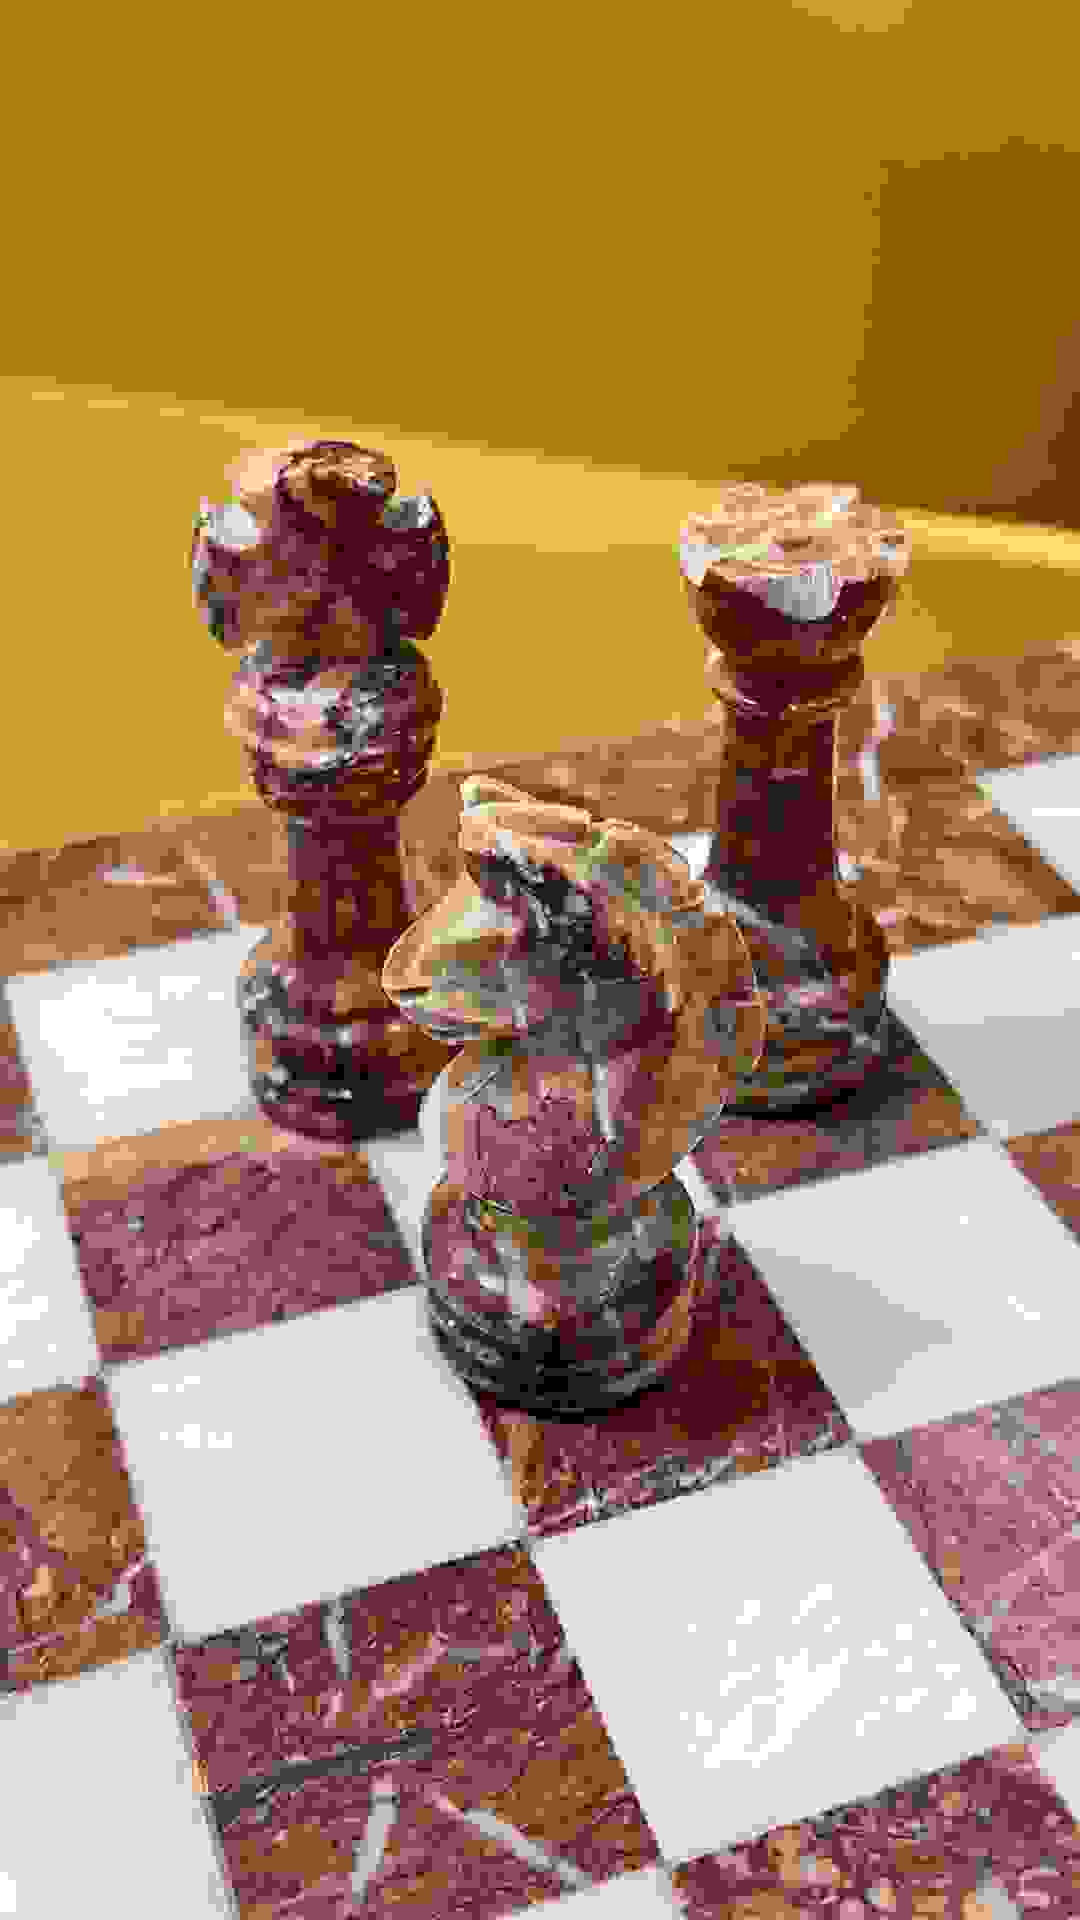 Italfama Chess Set 1027 Pink White Marble 30cm